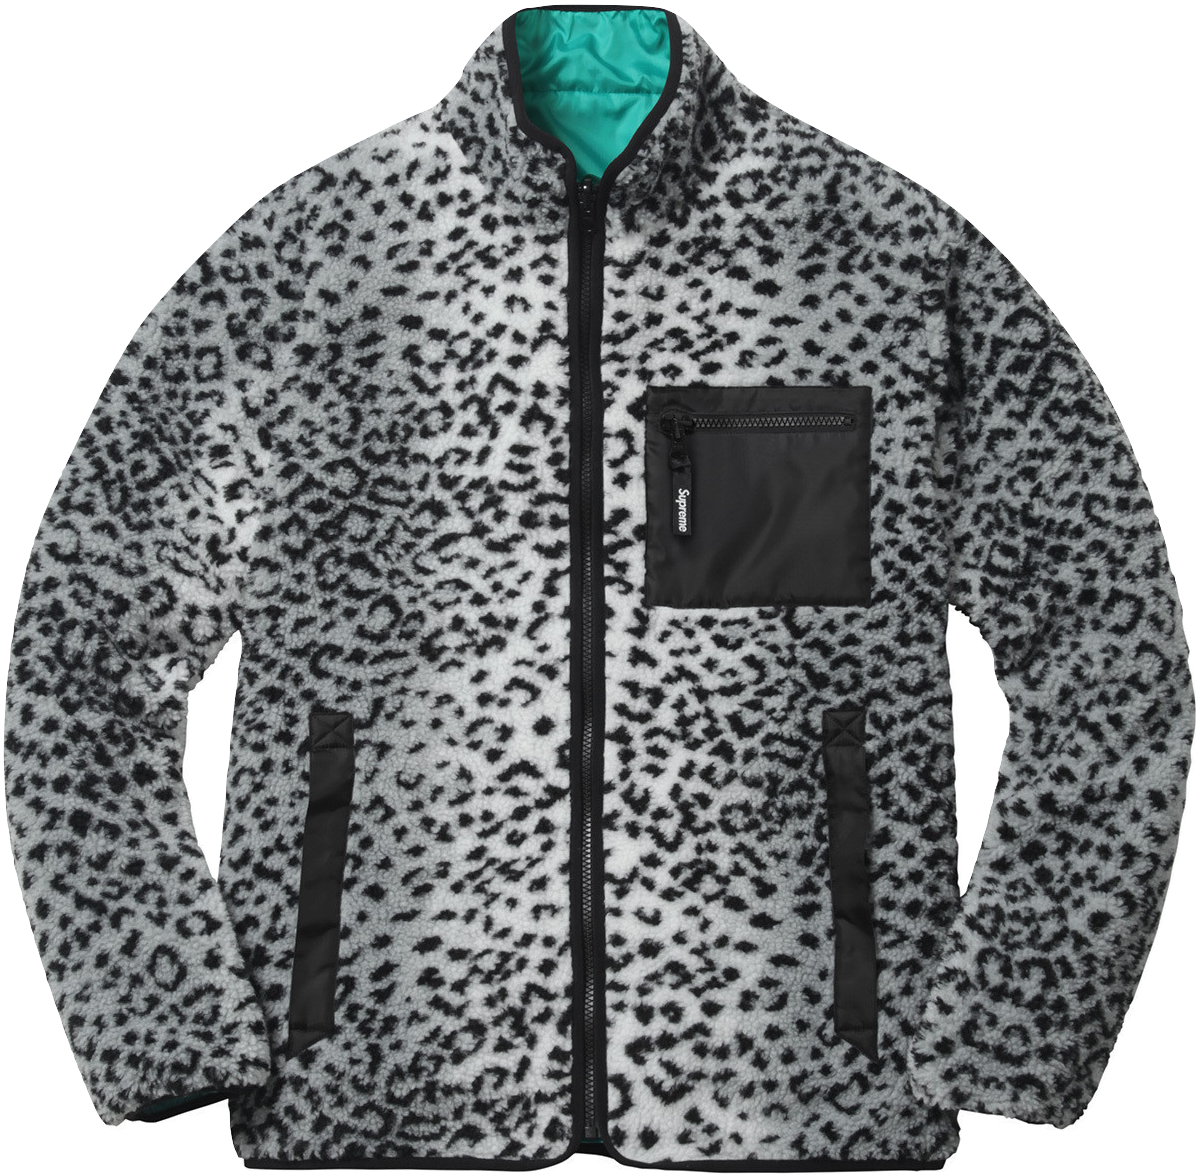 Supreme Leopard Fleece Reversible Jacket - White